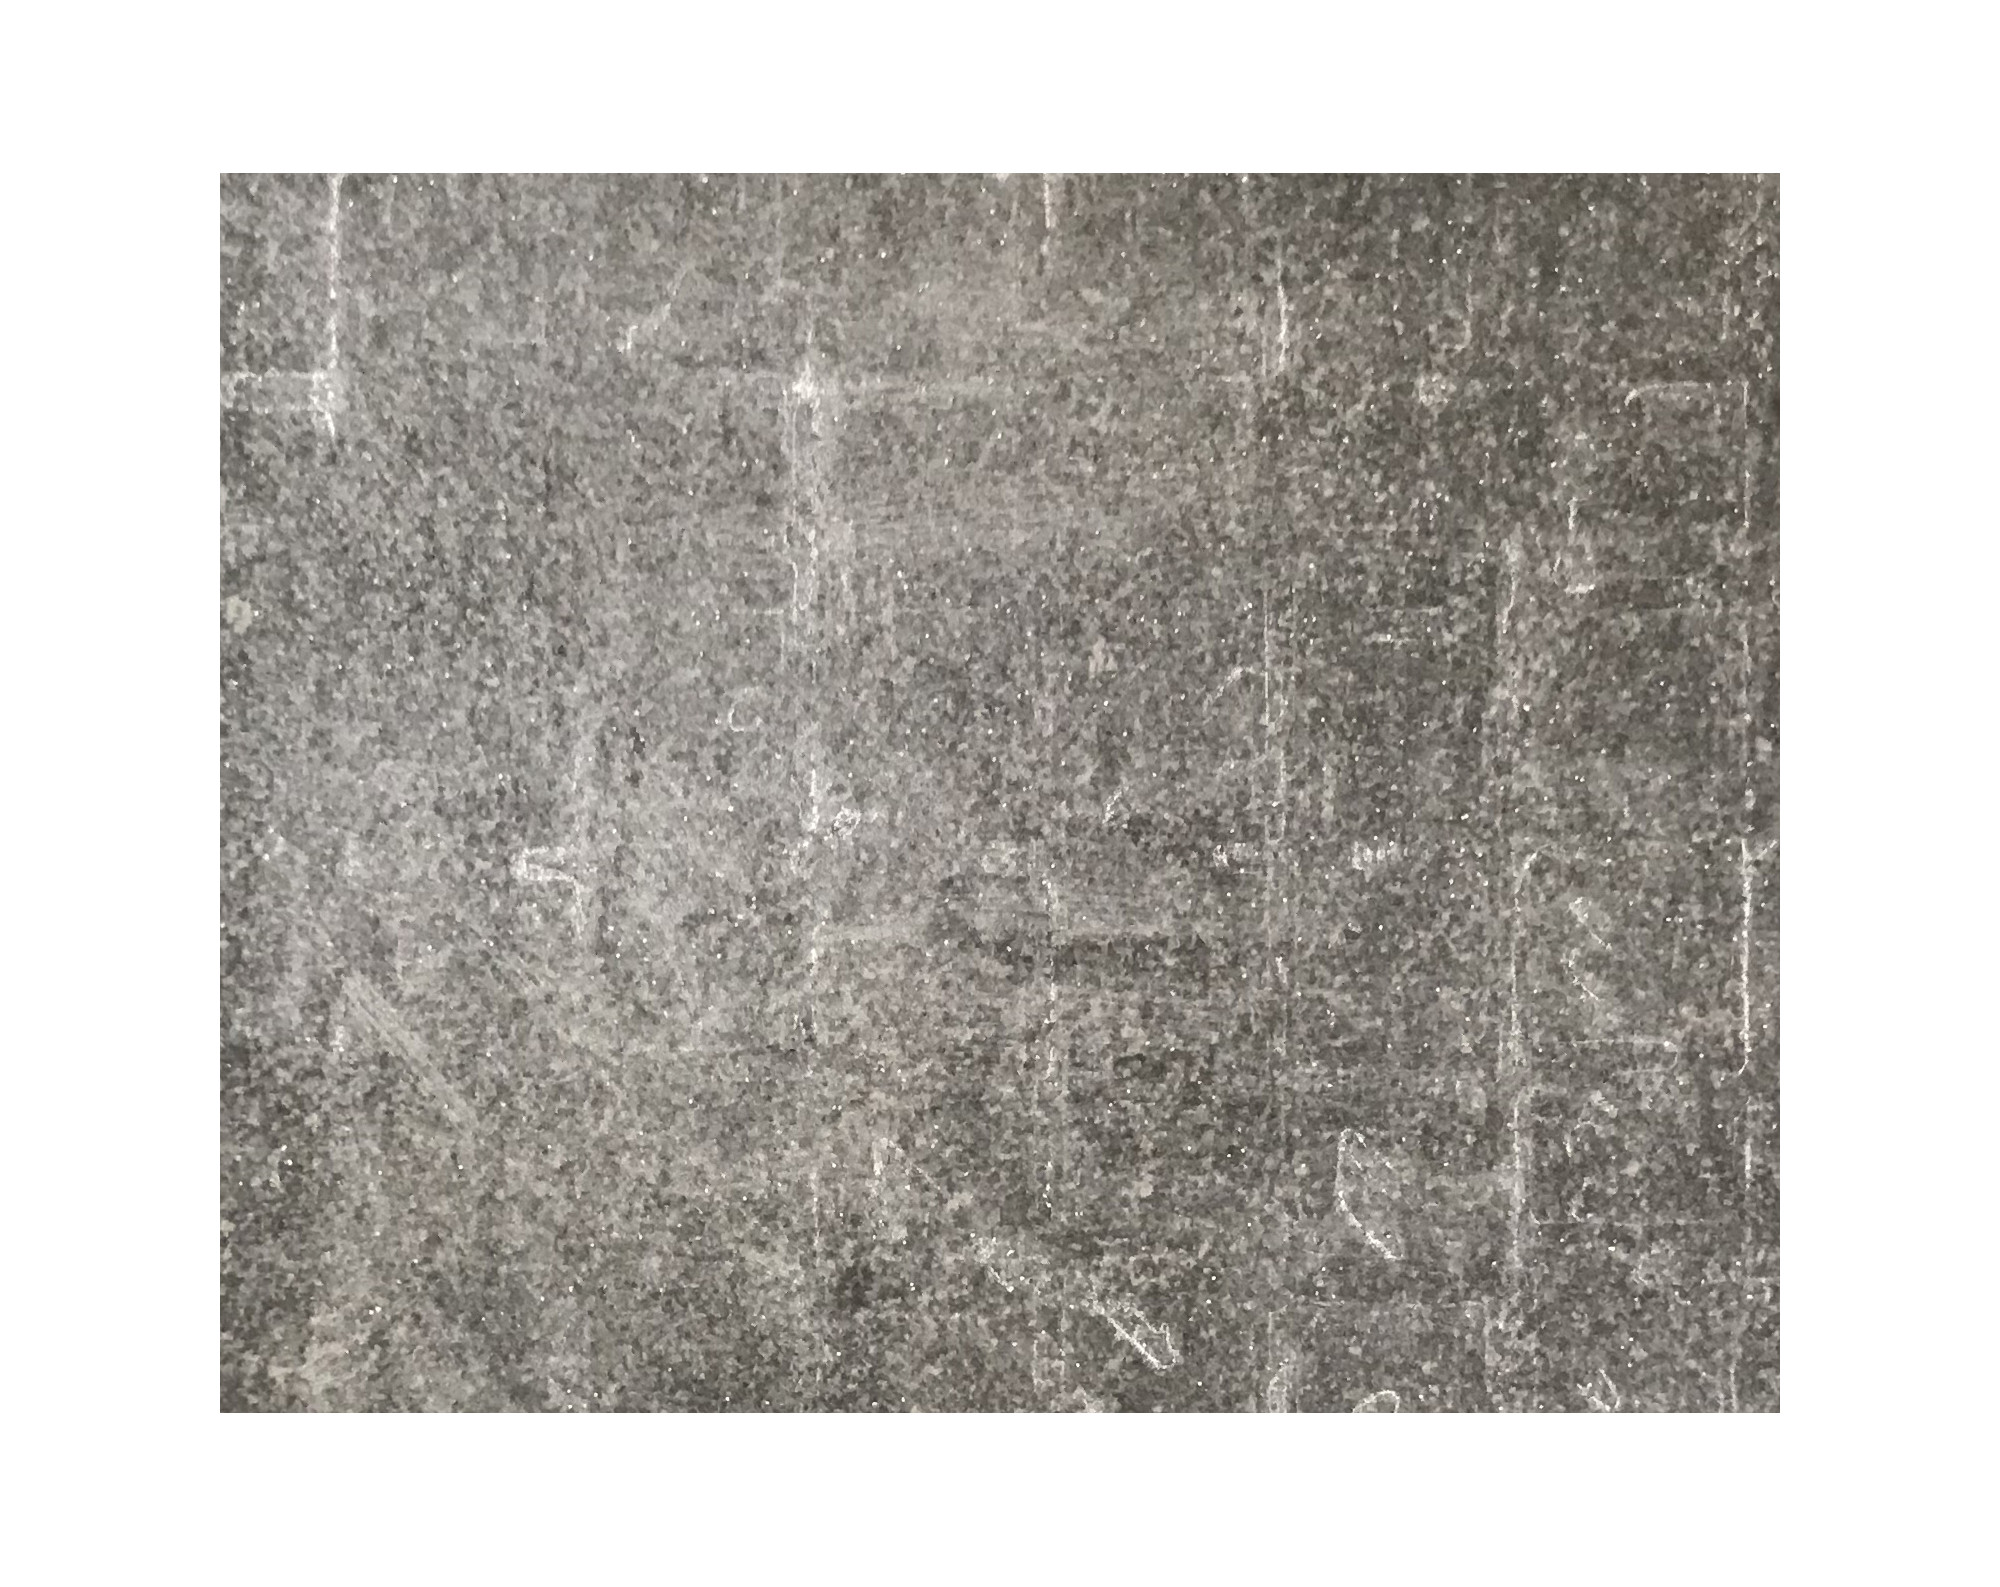 Harmo roc maranelloset, keramiek-serie, rond d: 3,00 m, zand zwart , keramisch porselein